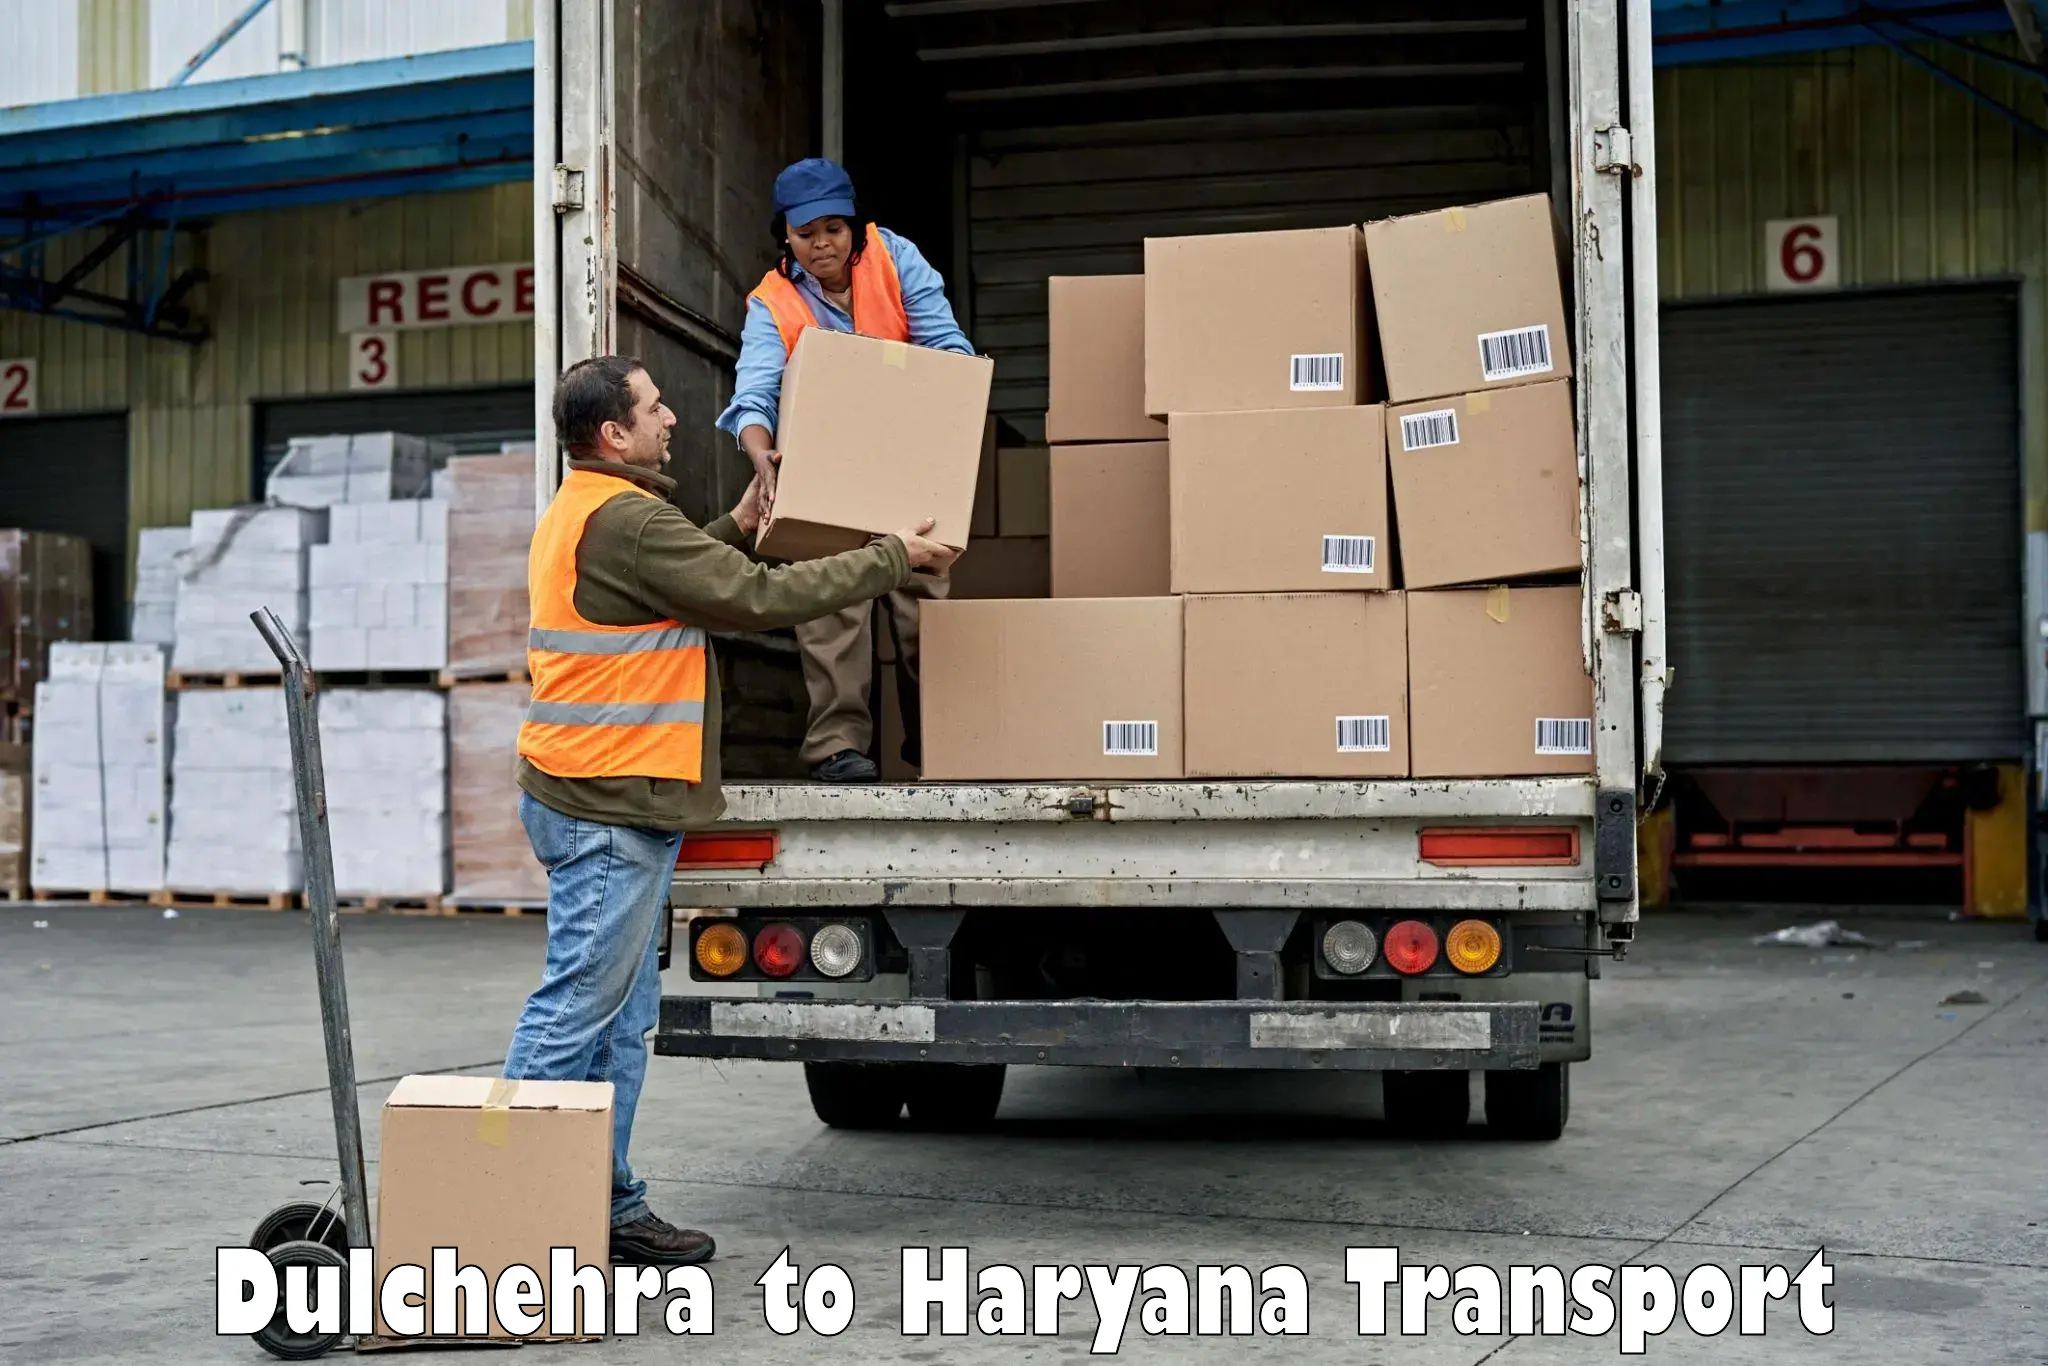 Furniture transport service Dulchehra to Nuh